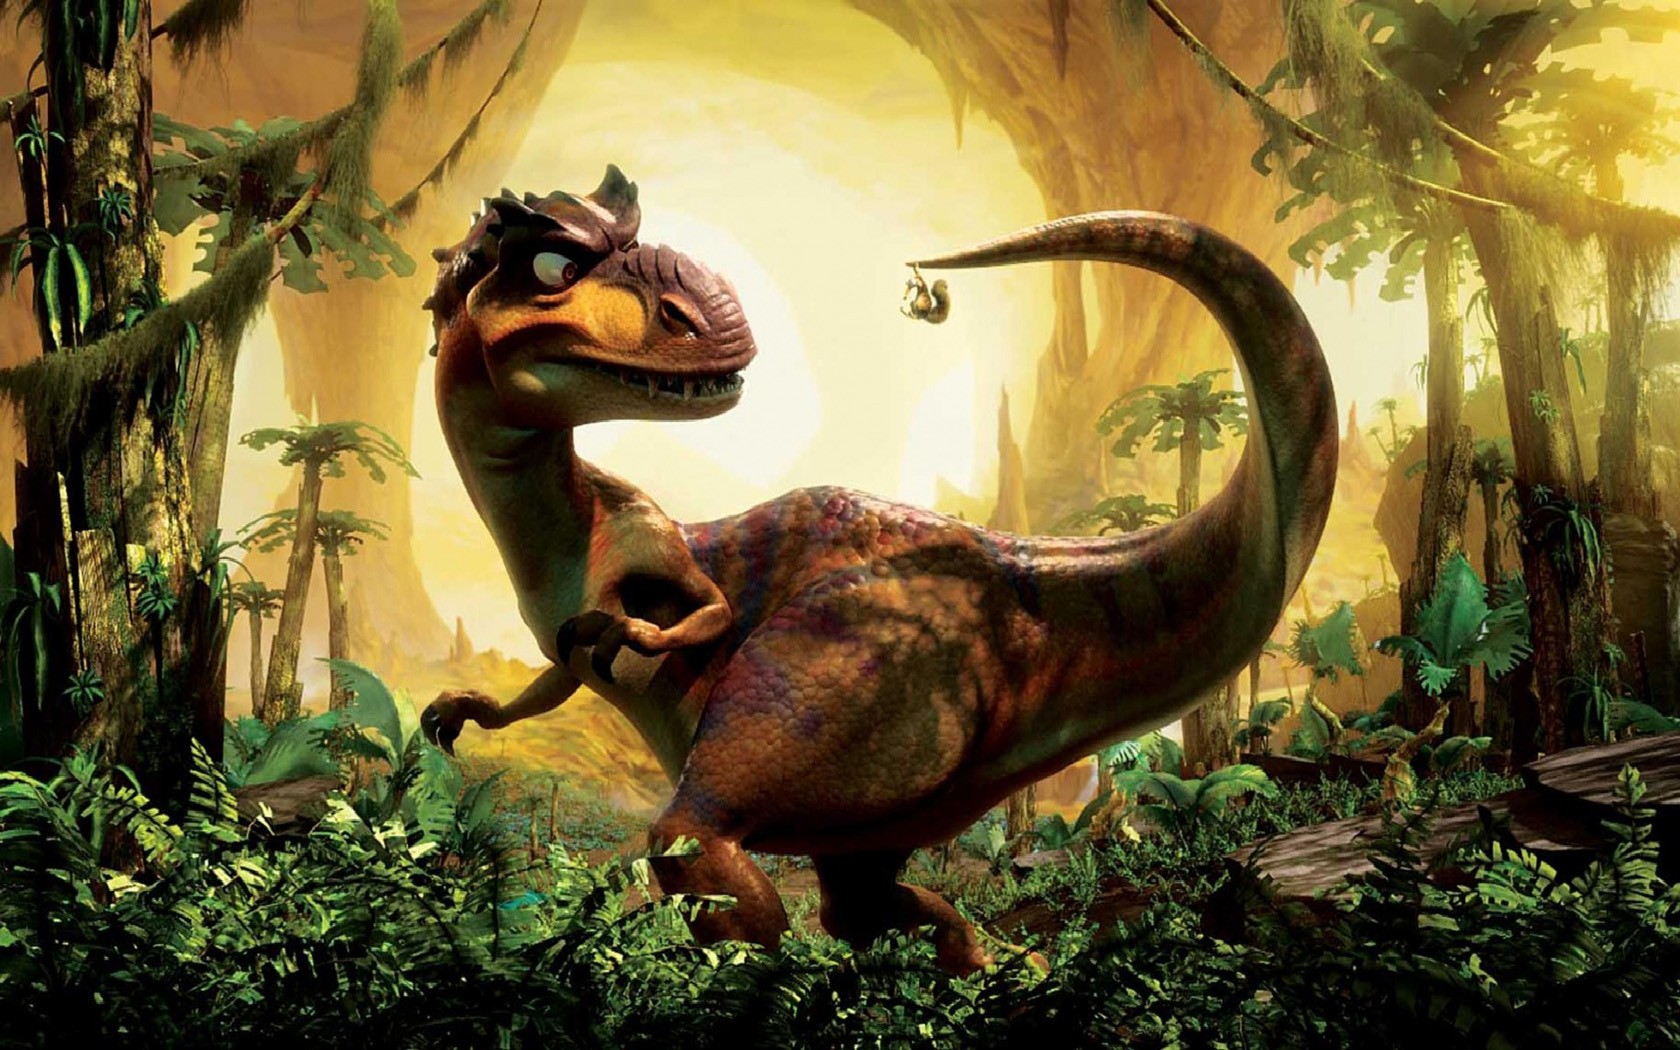 movie, ice age: dawn of the dinosaurs, dinosaur, jungle, vegetation